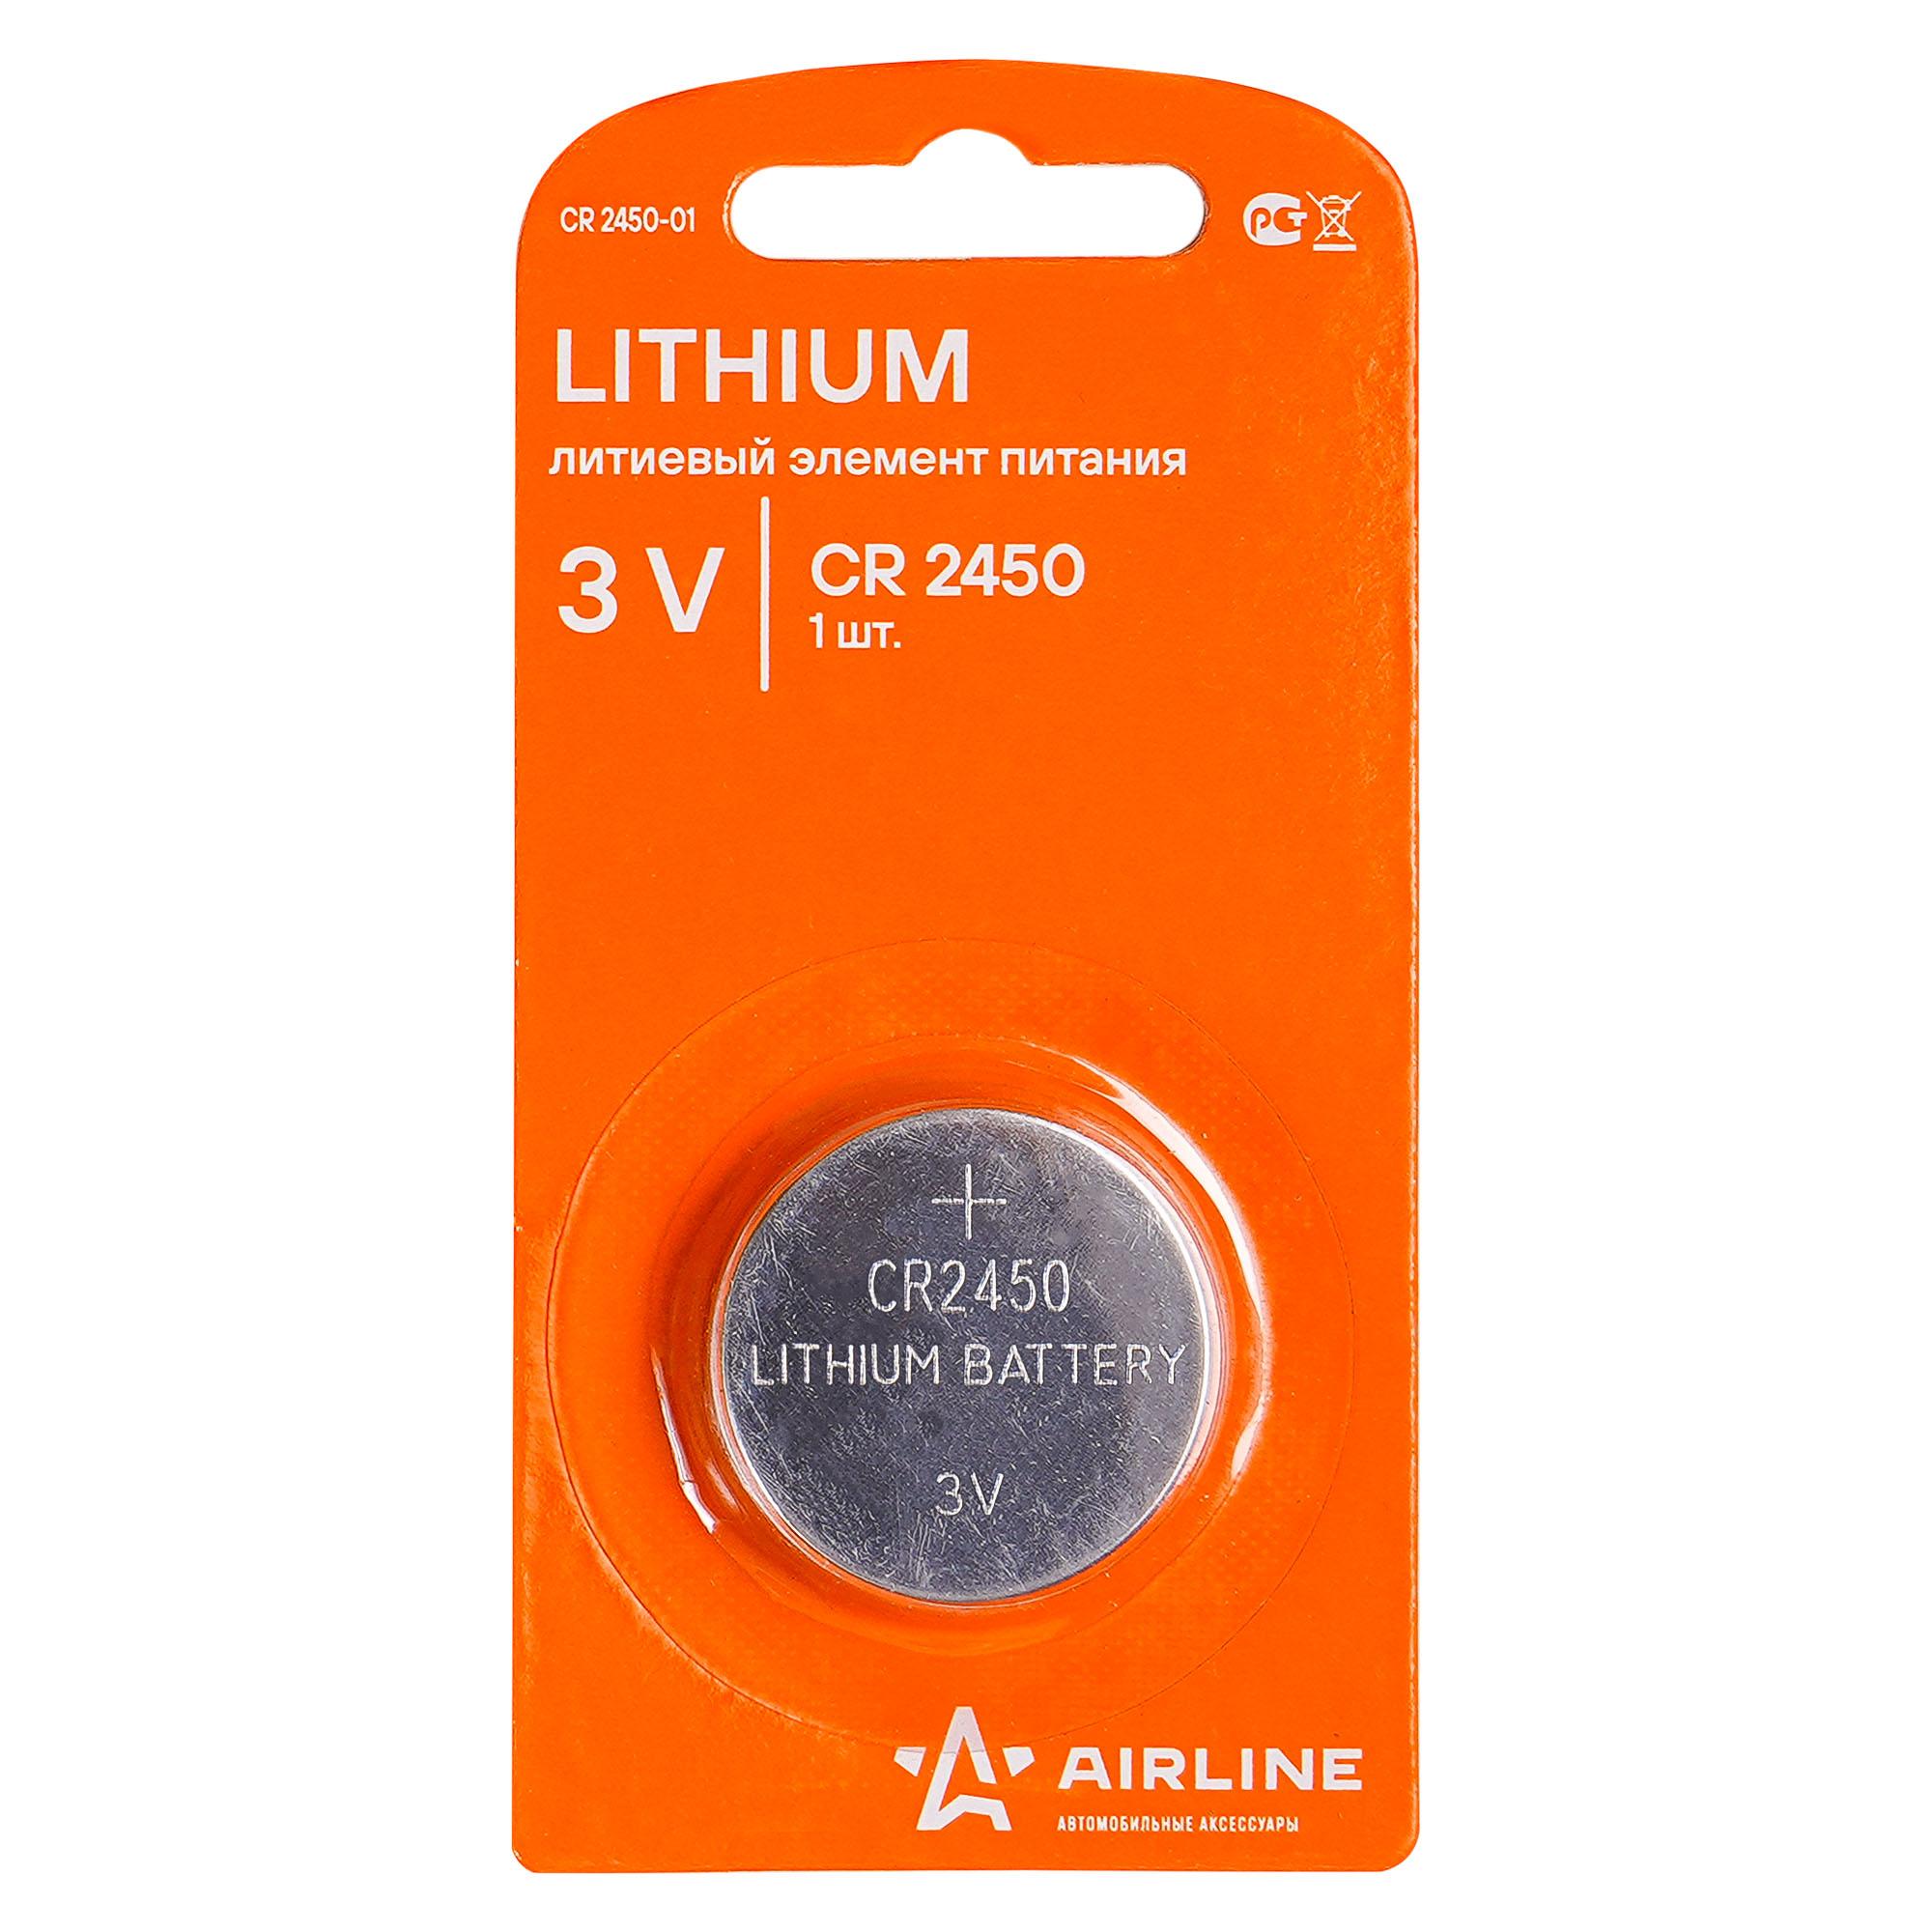 AIRLINE CR245001 Батарейка CR2450 3V для брелоков сигнализаций литиевая 1 шт. (CR2450-01) литиевая батарейка для брелоков сигнализаций airline